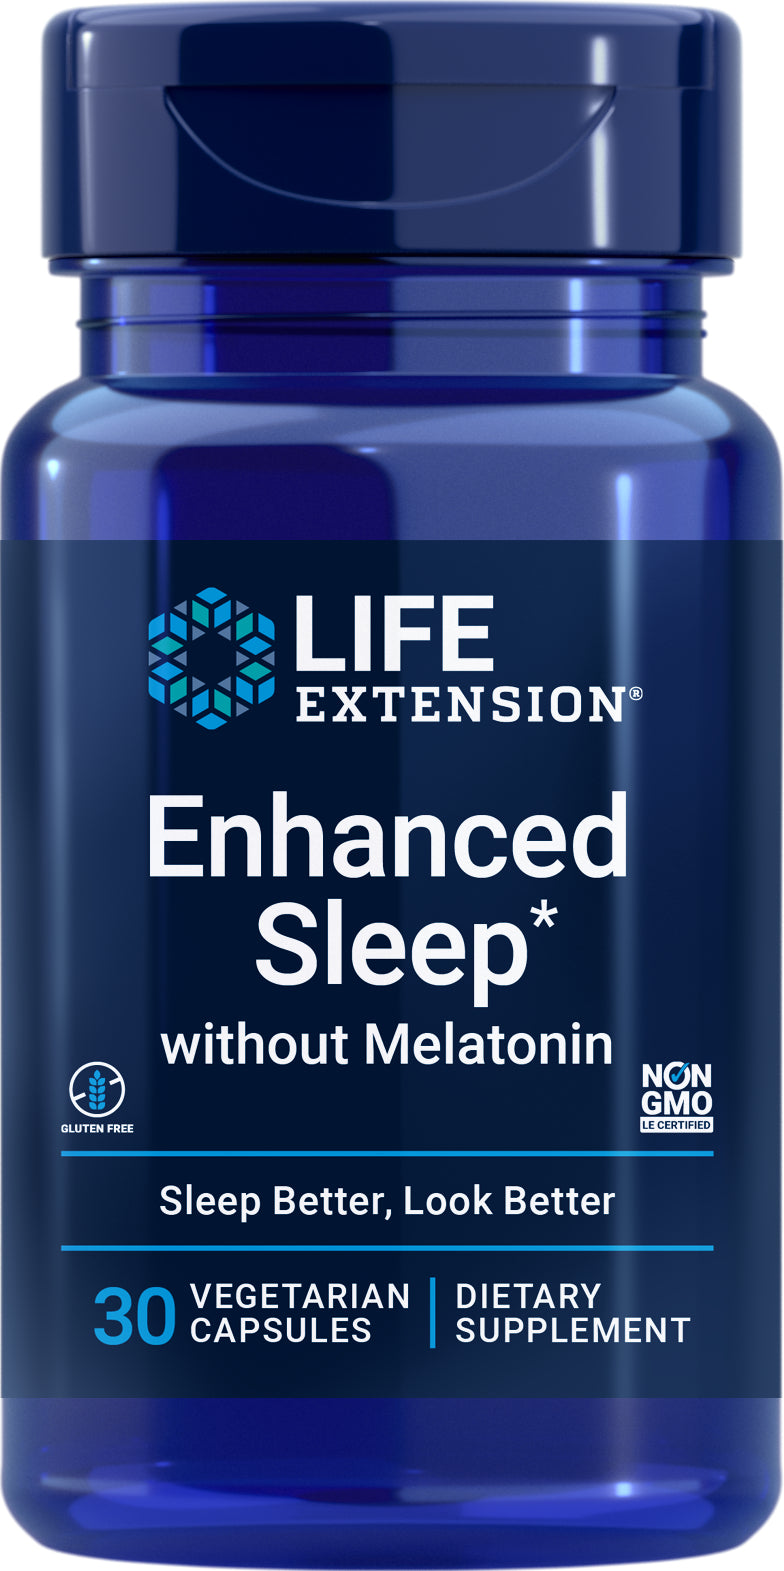 Enhanced Sleep without Melatonin 30 veg caps by Life Extension